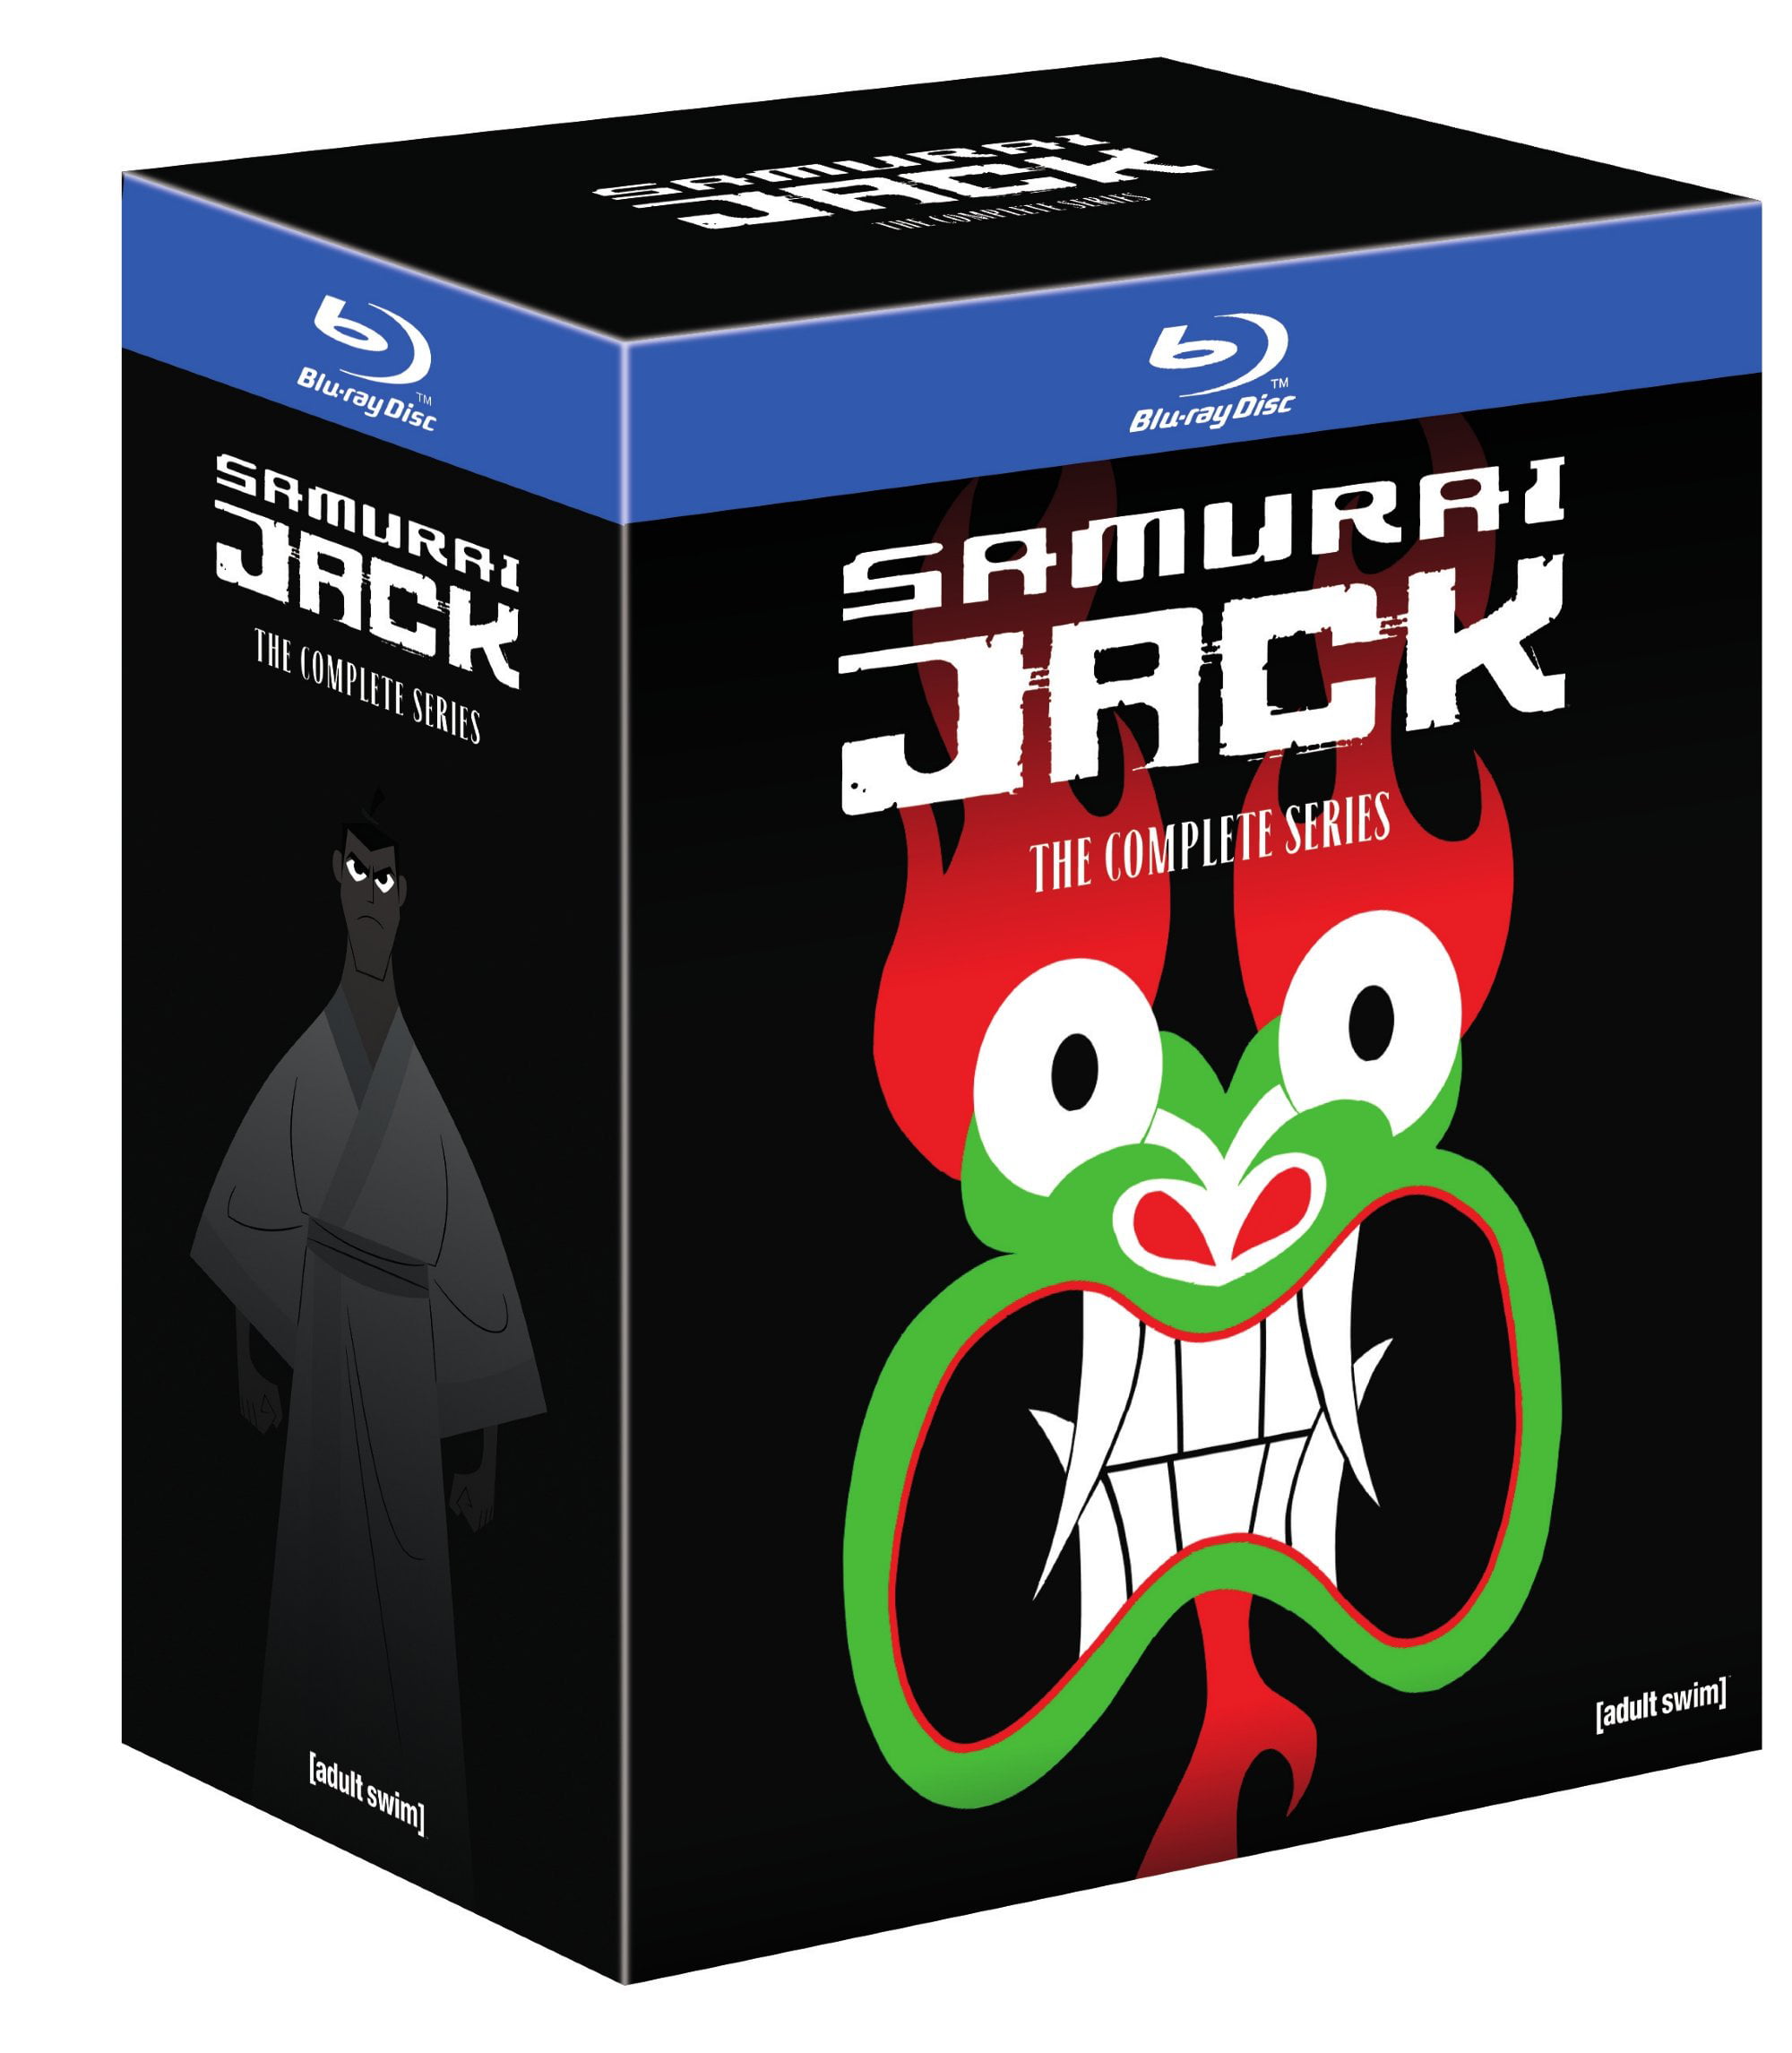 samurai jack season 1 complete .zip